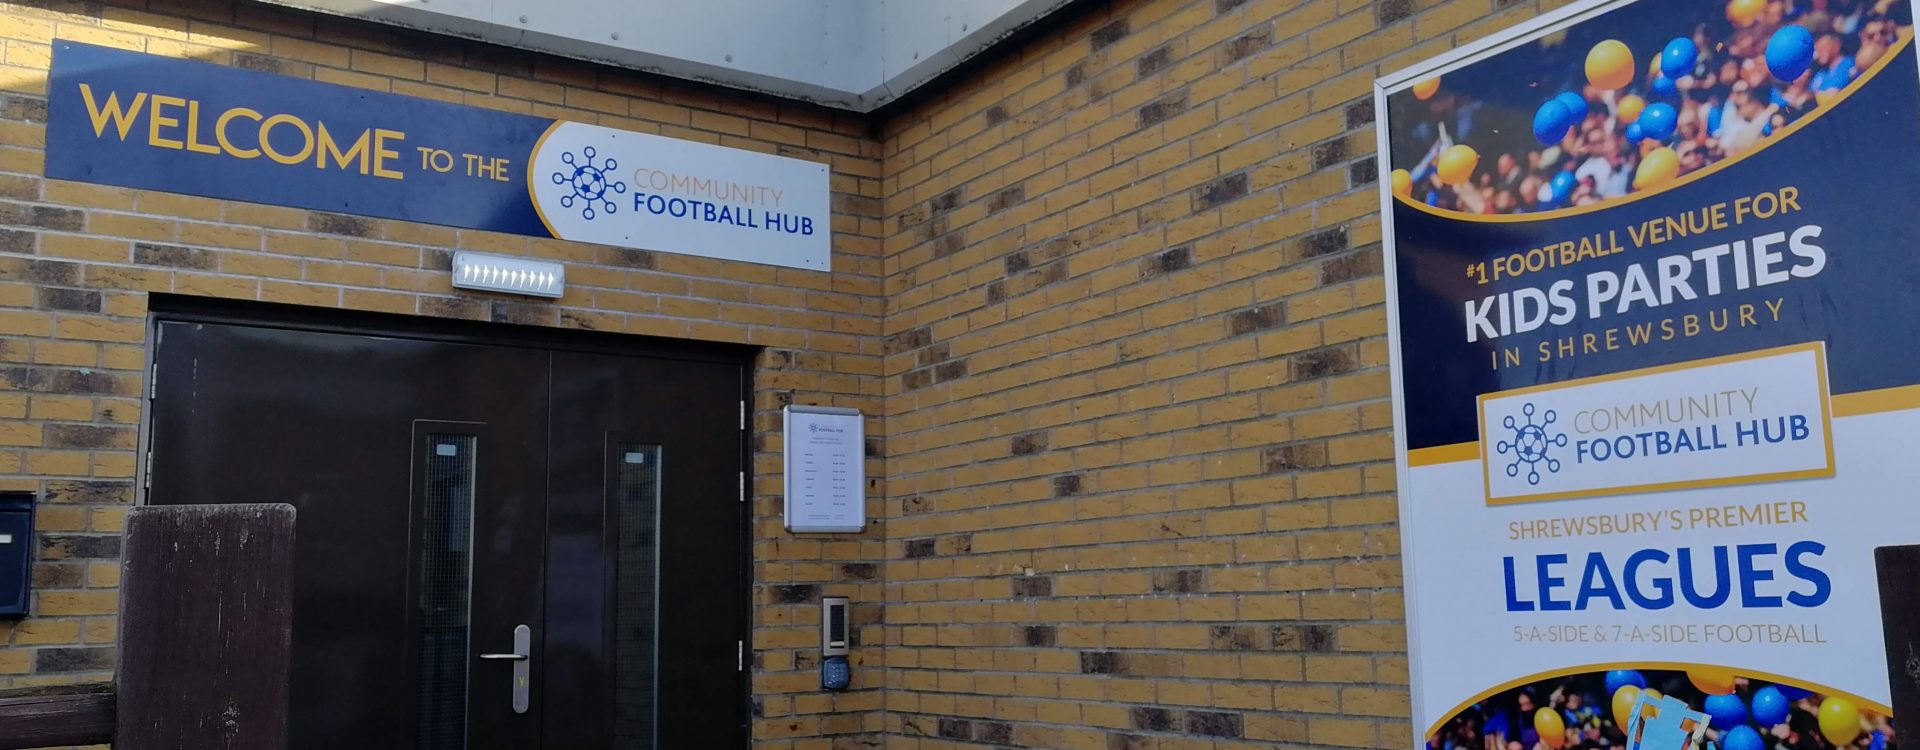 Signage above entrance at Community Football hub